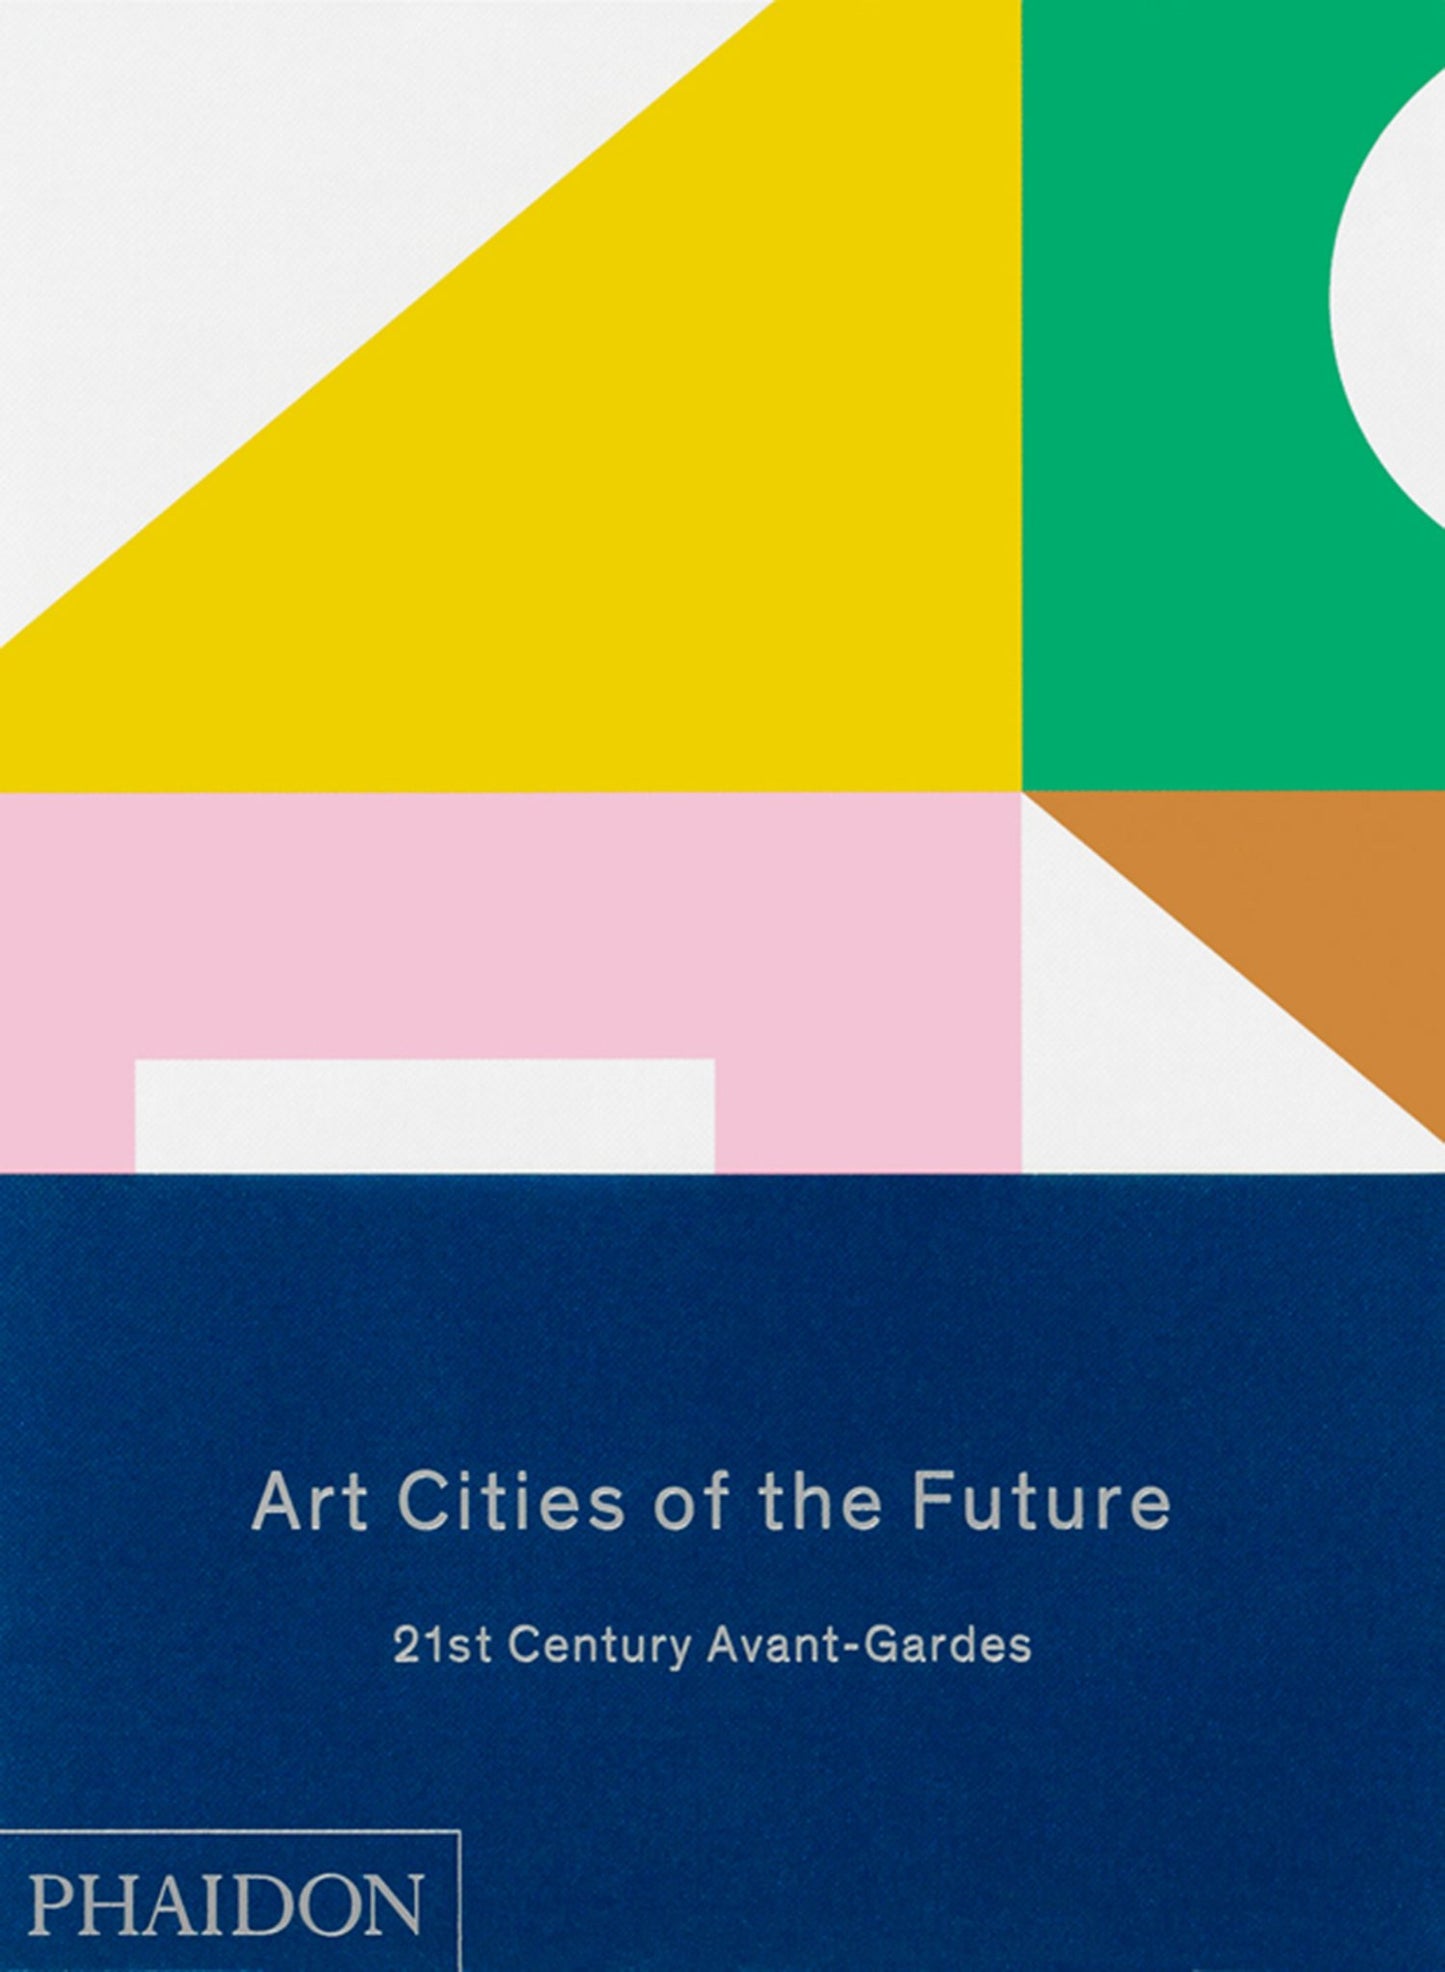 Art Cities of the Future: 21st-Century Avant-Gardes by Antawan I. Bryd and Reid Shier